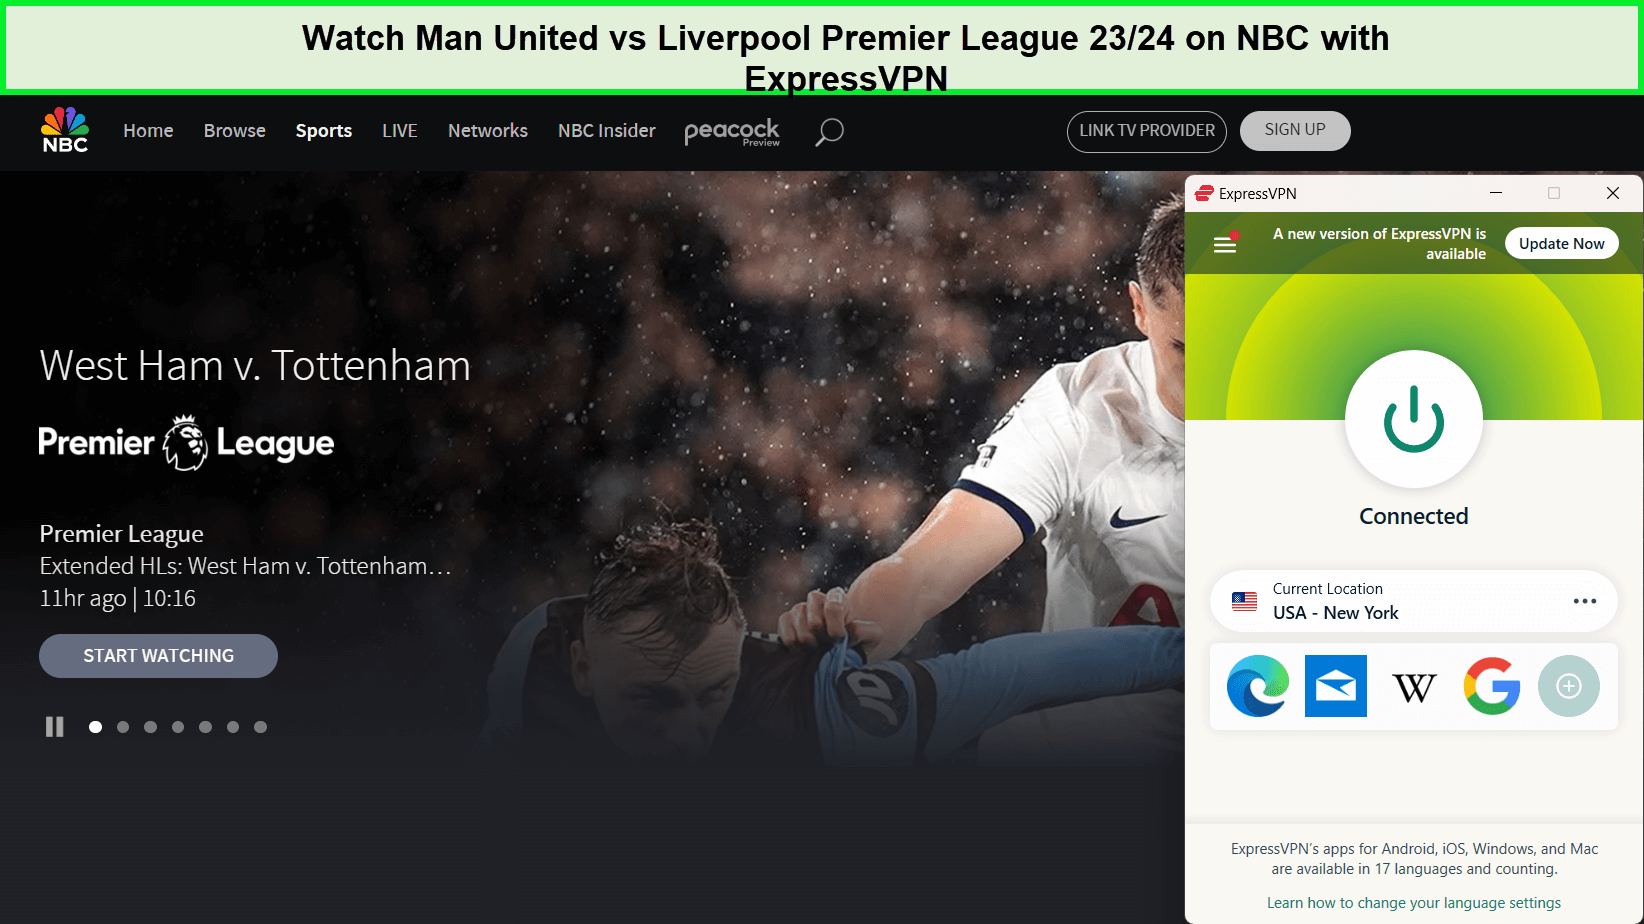 Watch-Man-United-vs-Liverpool-Premier-League-23-24-in-UK-on-NBC